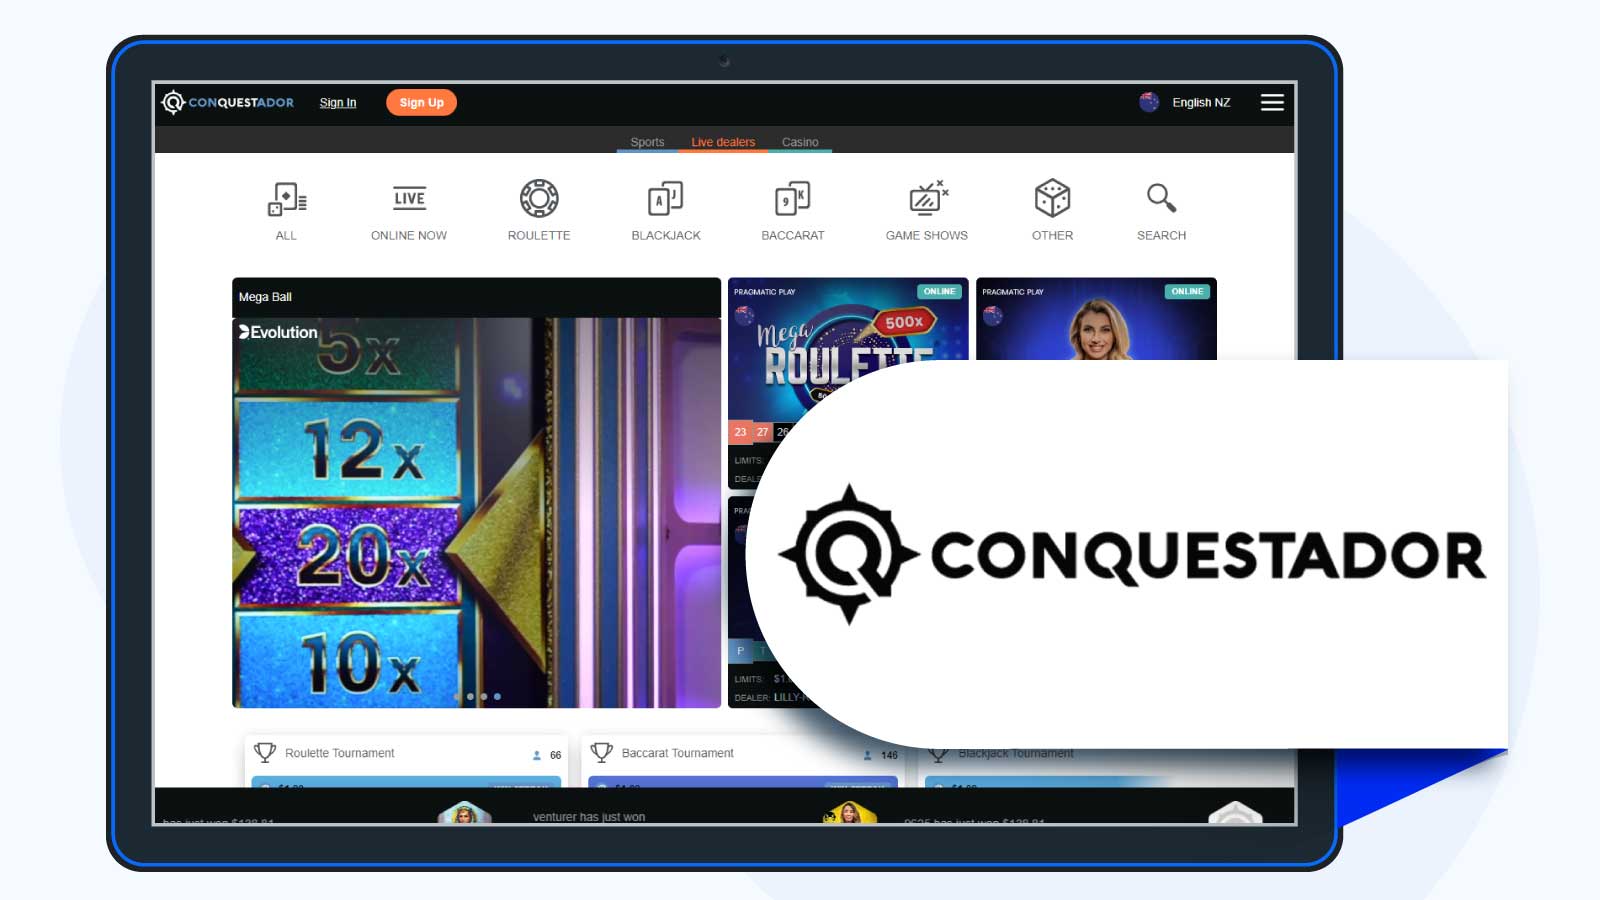 Conquestador-Best-Low-Deposit-Casino-for-Live-Dealer-Games